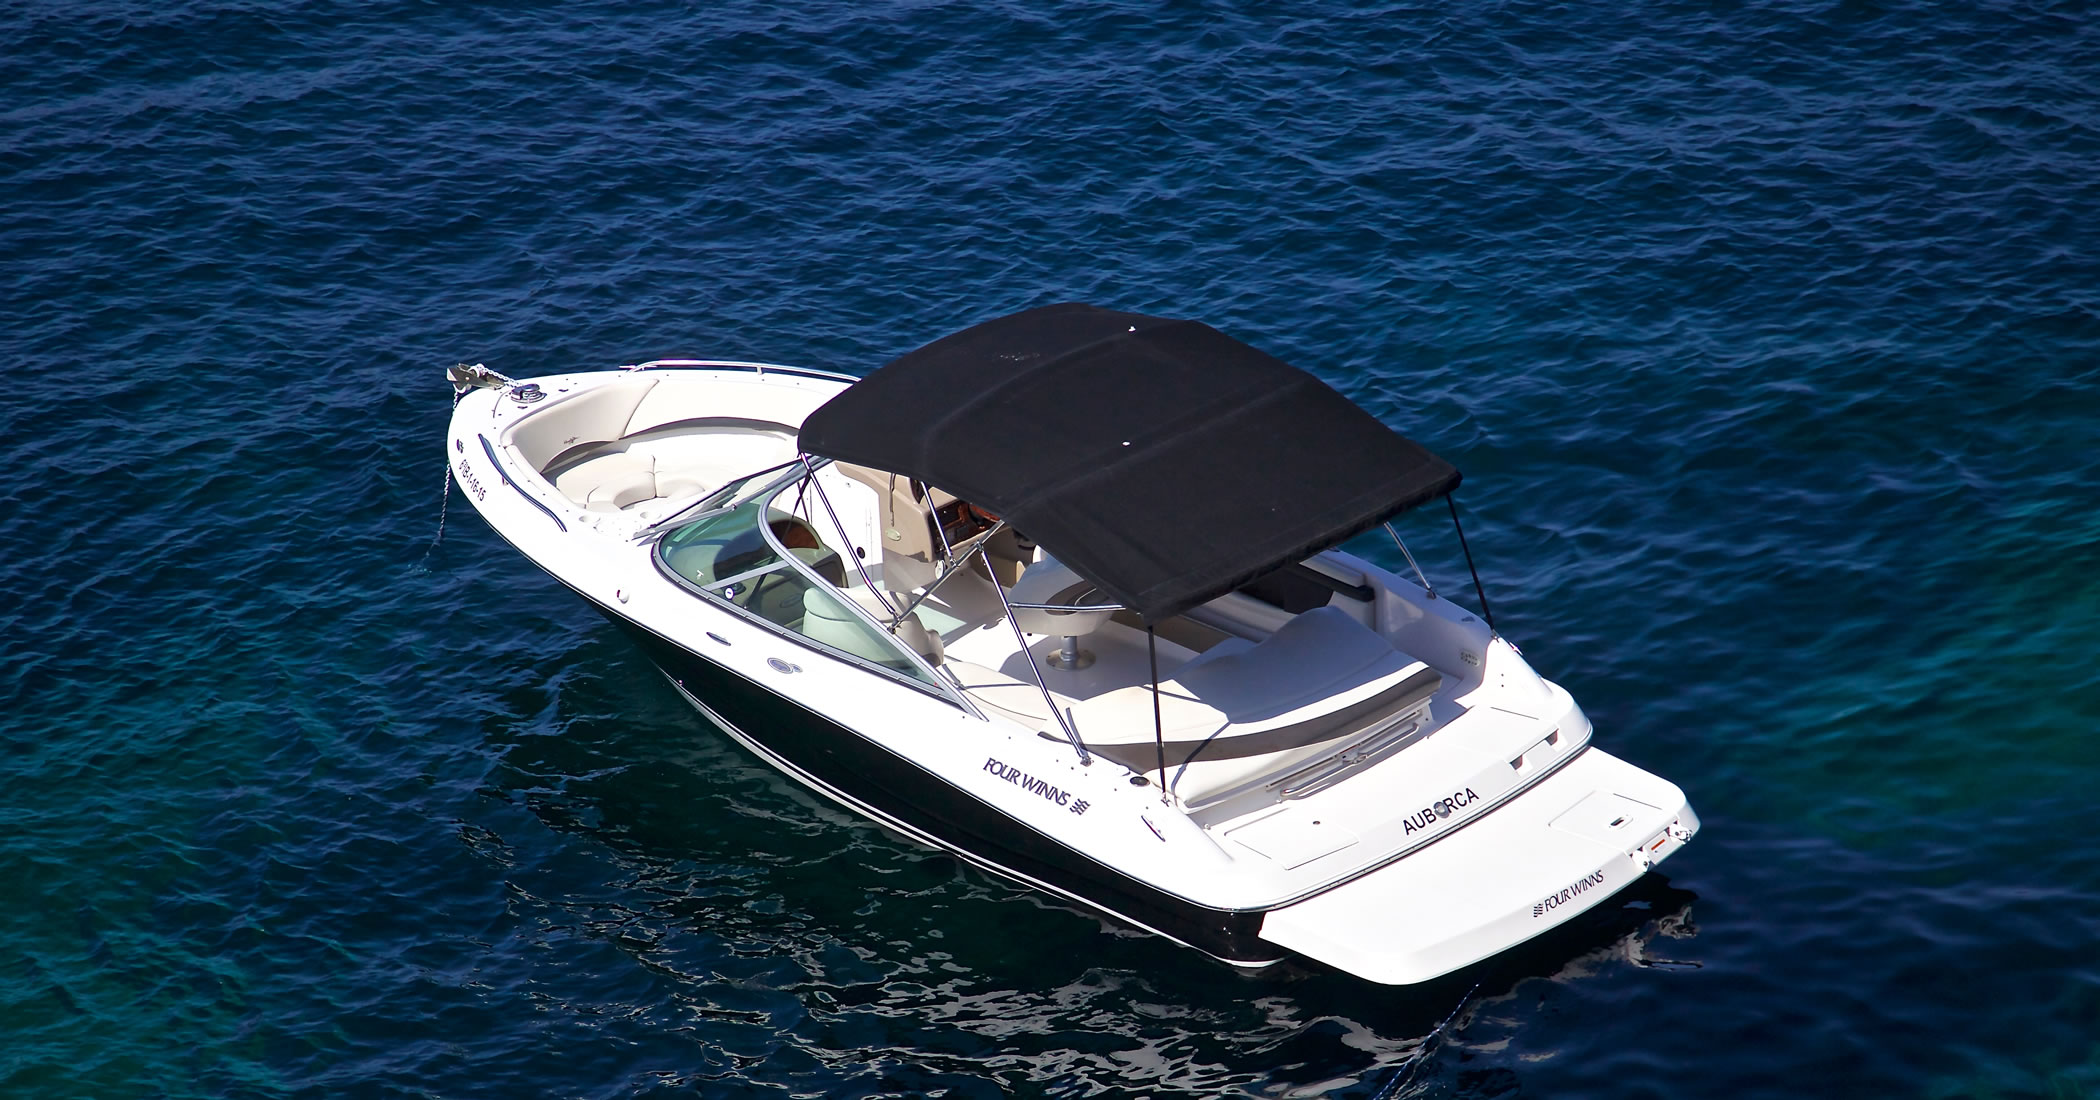 Rent Four Wins Boat - Ibiza Rent Boat